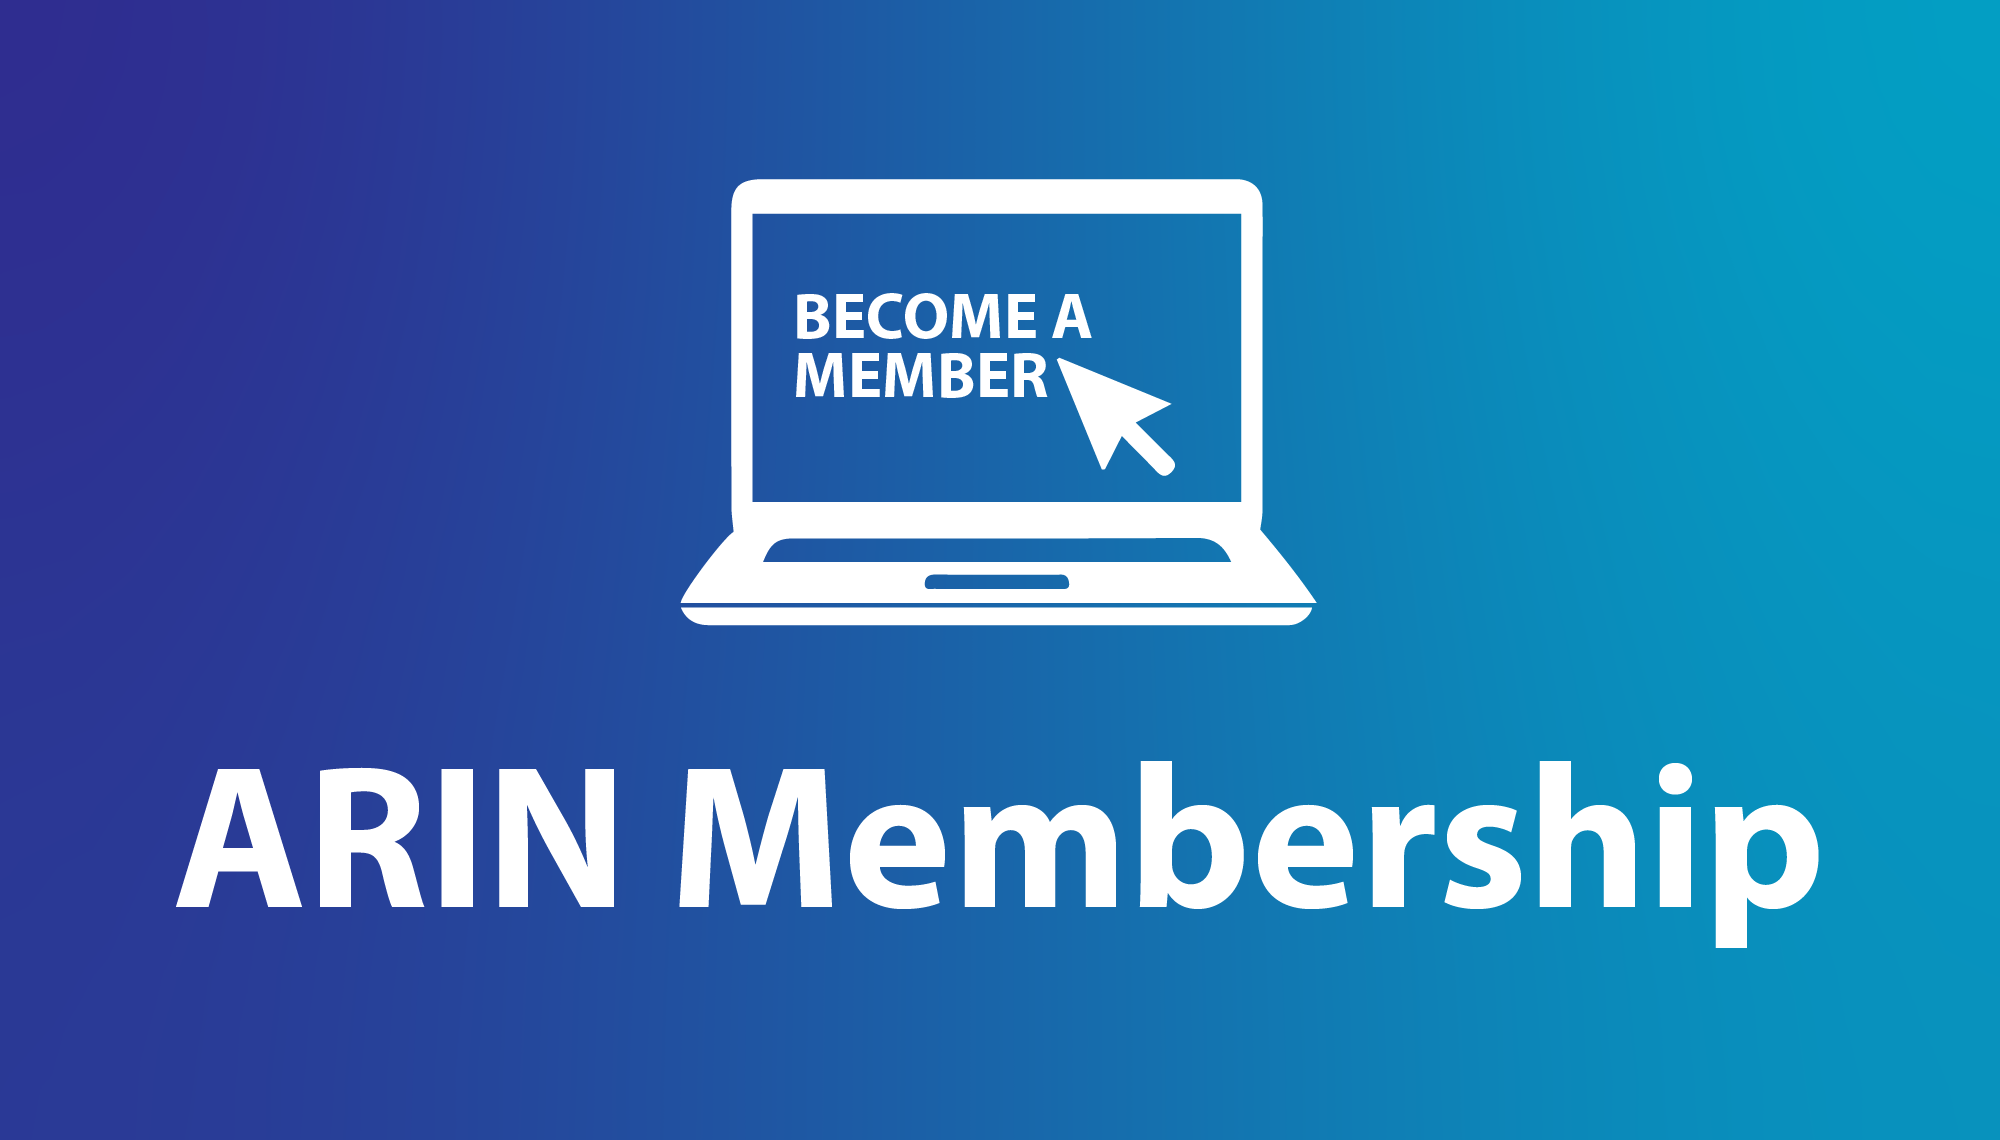 ARIN Membership: What’s Changed?